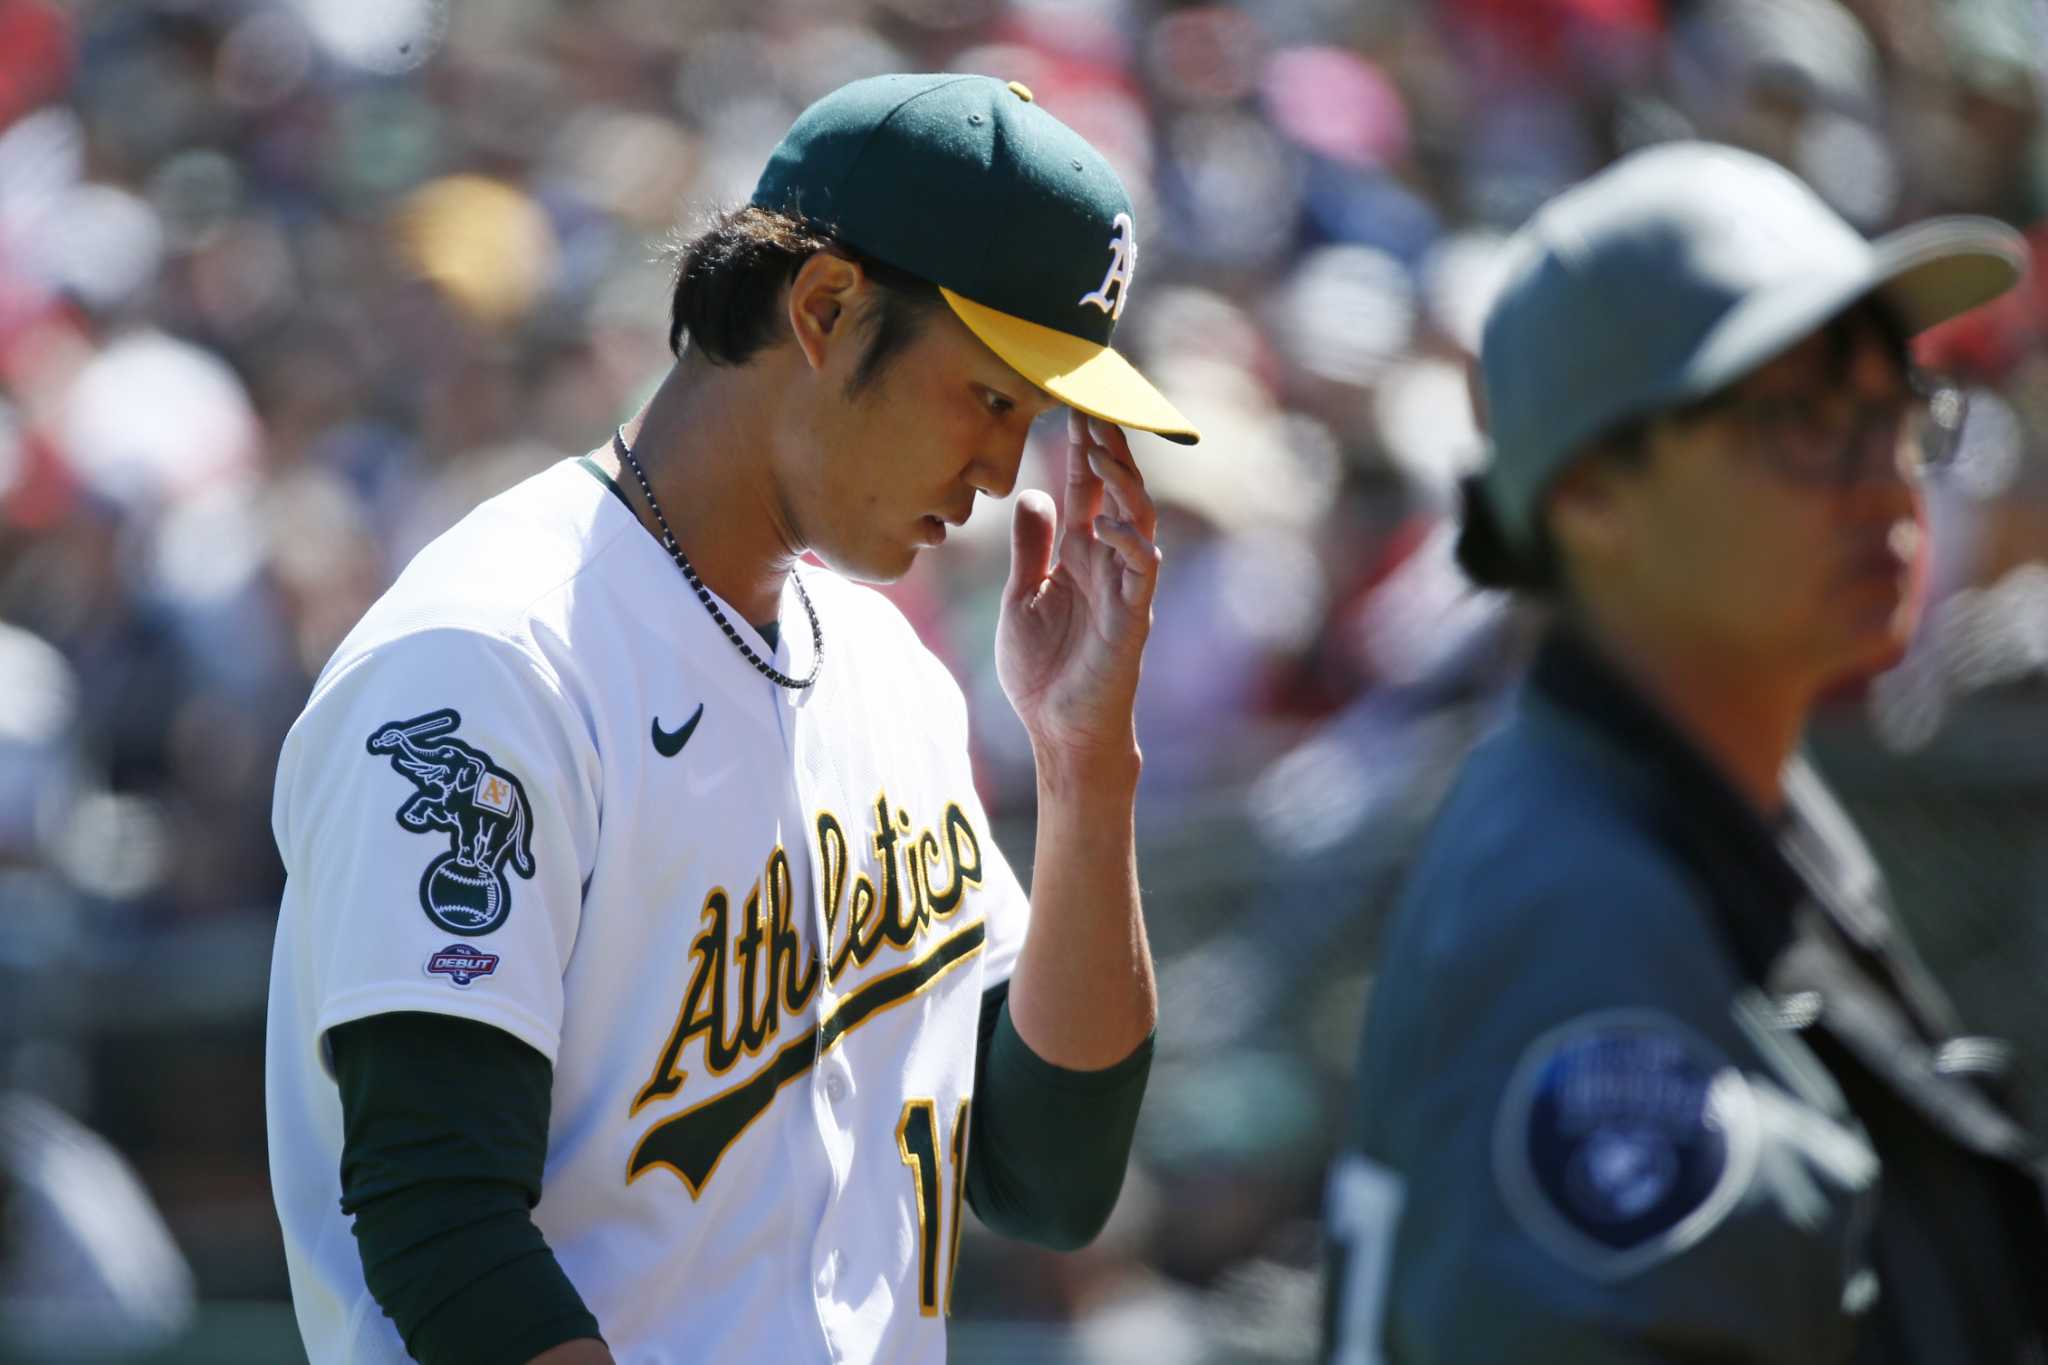 JPN@MLB: Fujinami strikes out five for Samurai Japan 